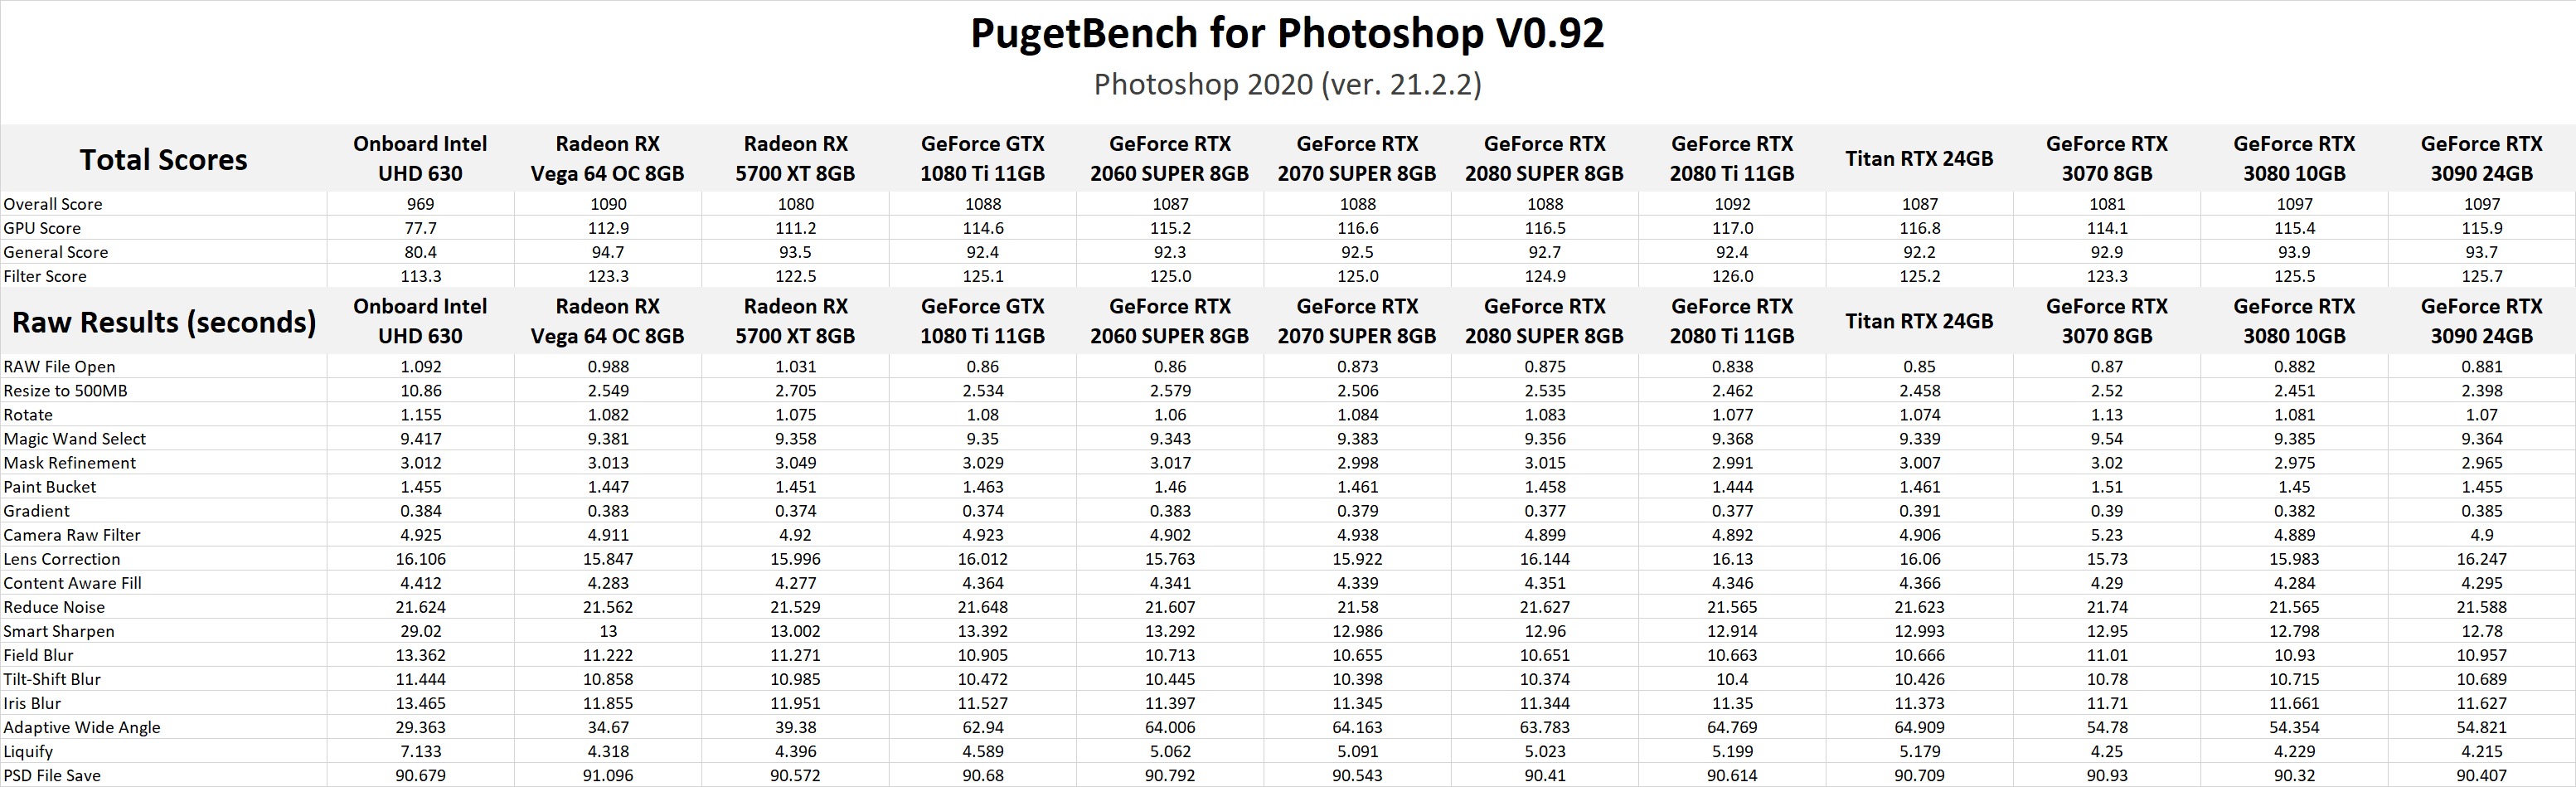 NVIDIA GeForce RTX 3070 8GB, 3080 10GB & RTX 3090 24GB Photoshop GPU Performance Benchmark